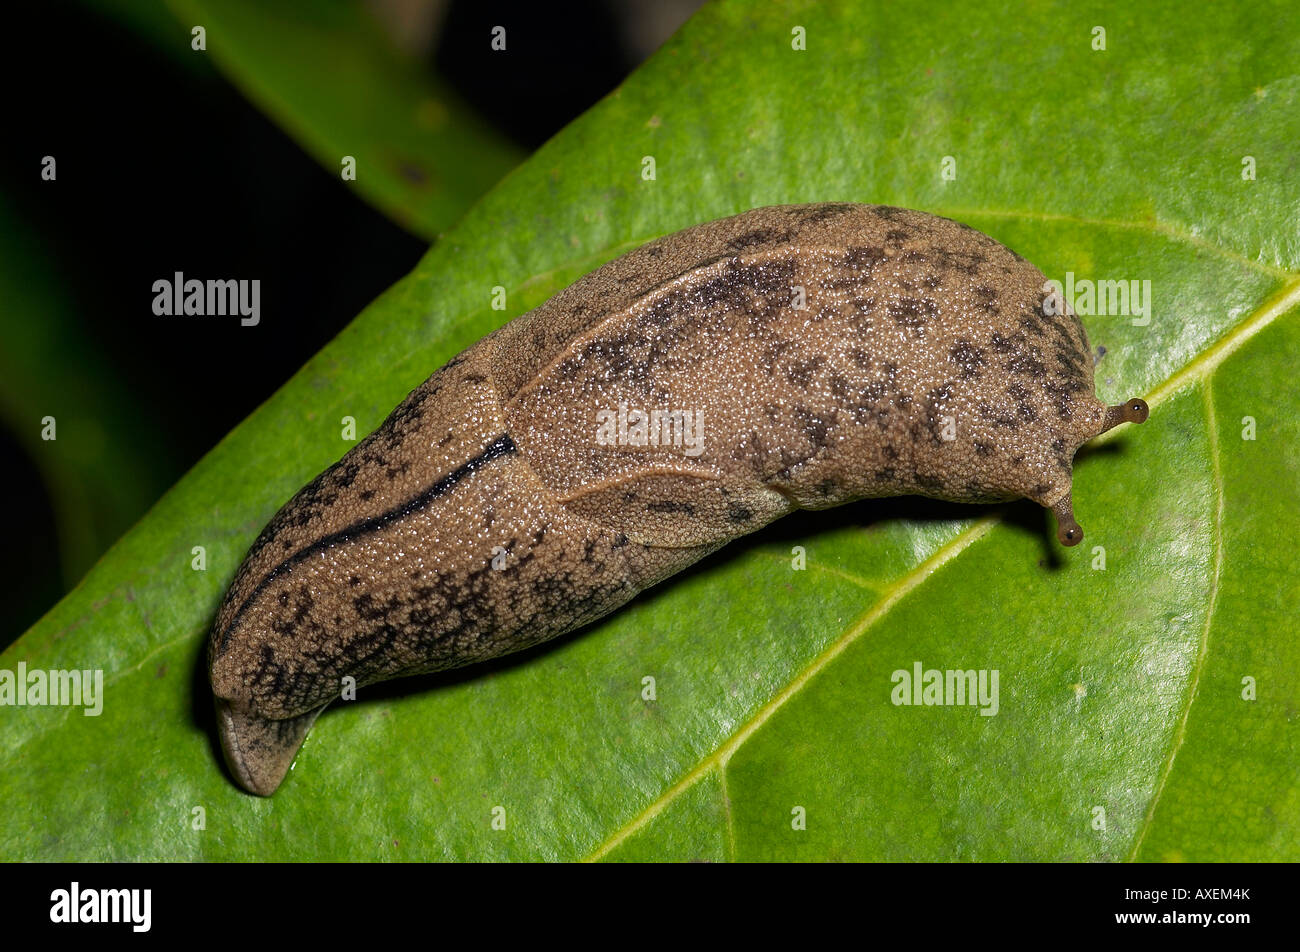 MOLLUSC, SLUG. Slug on leaf. Note stalked eyes. Photographed at night in Agumbe, Karnataka, INDIA. Stock Photo